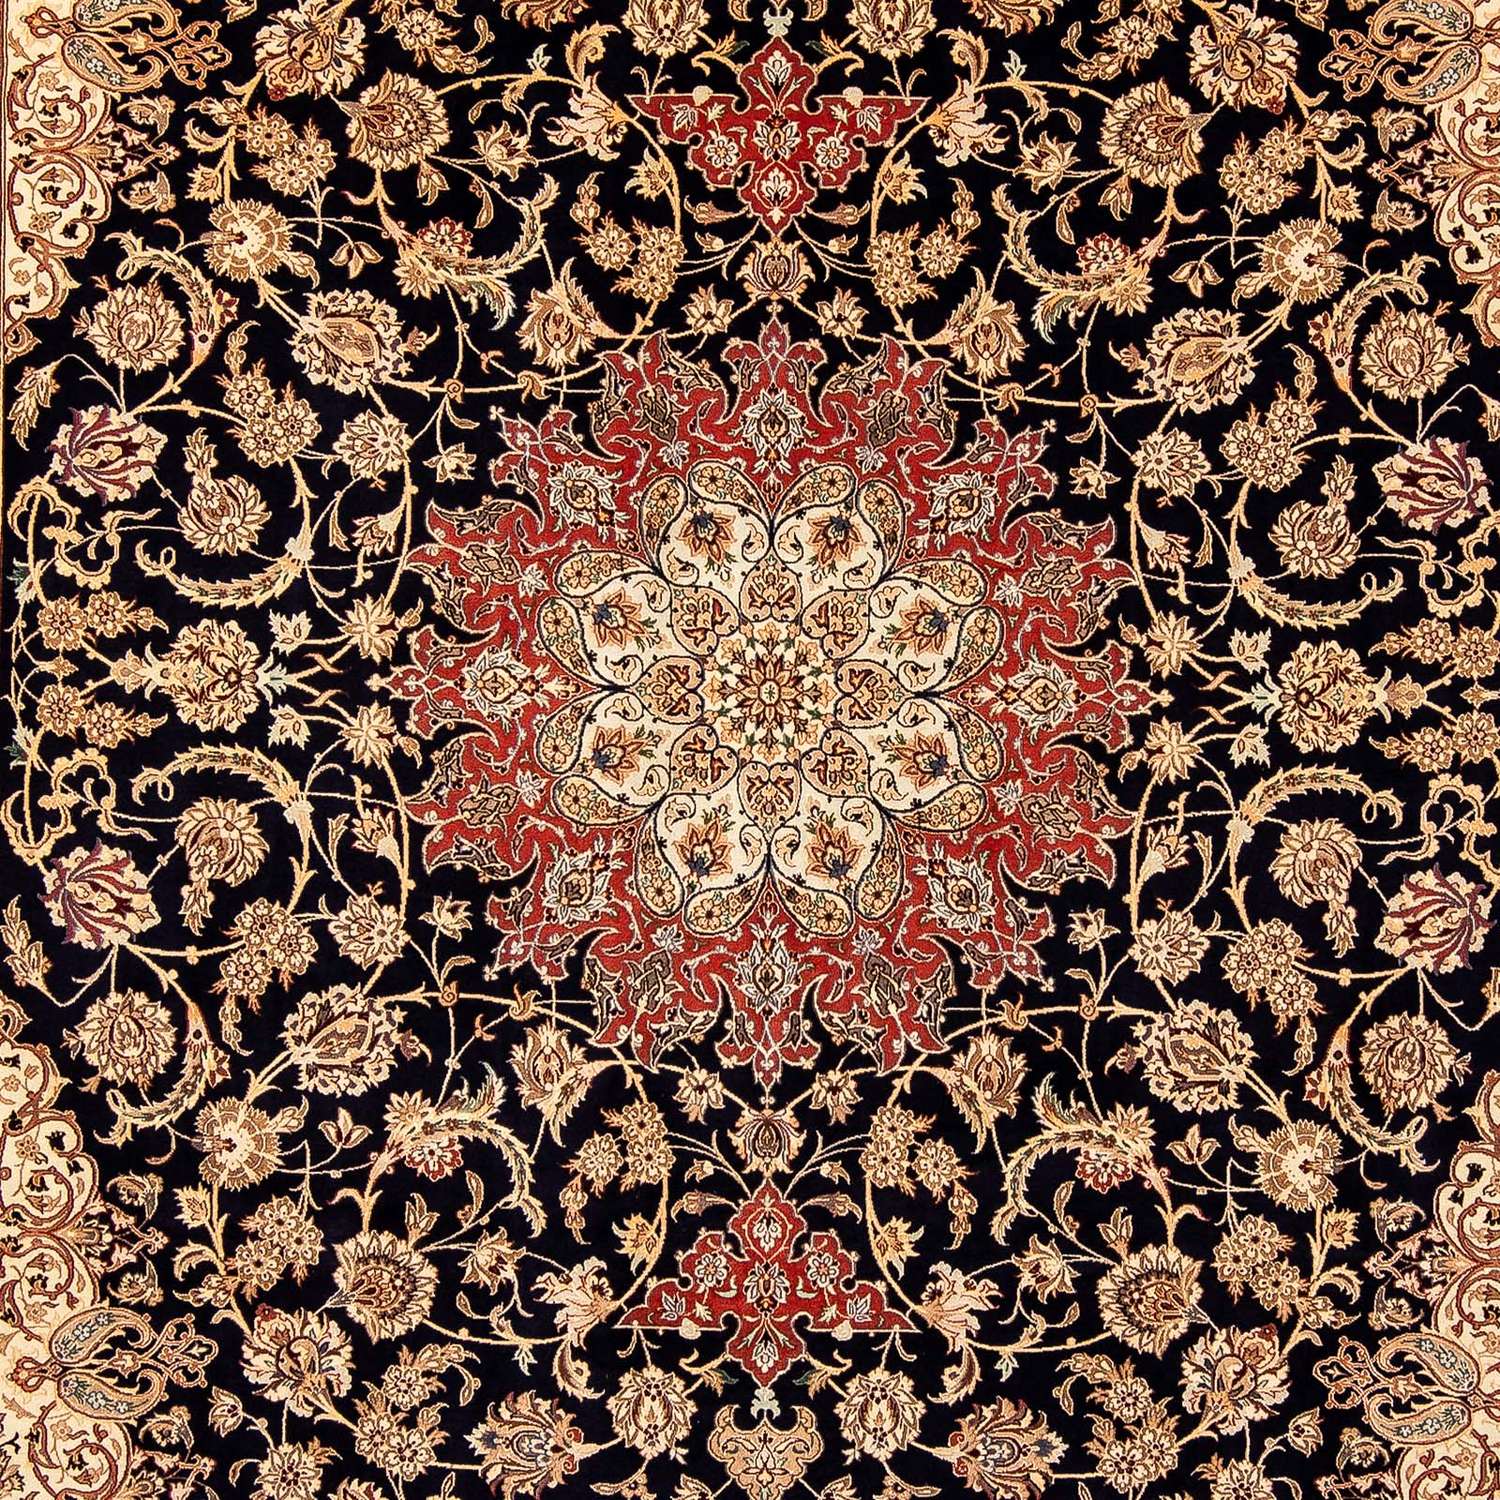 Perser Rug - Isfahan - Premium - 344 x 255 cm - dark red